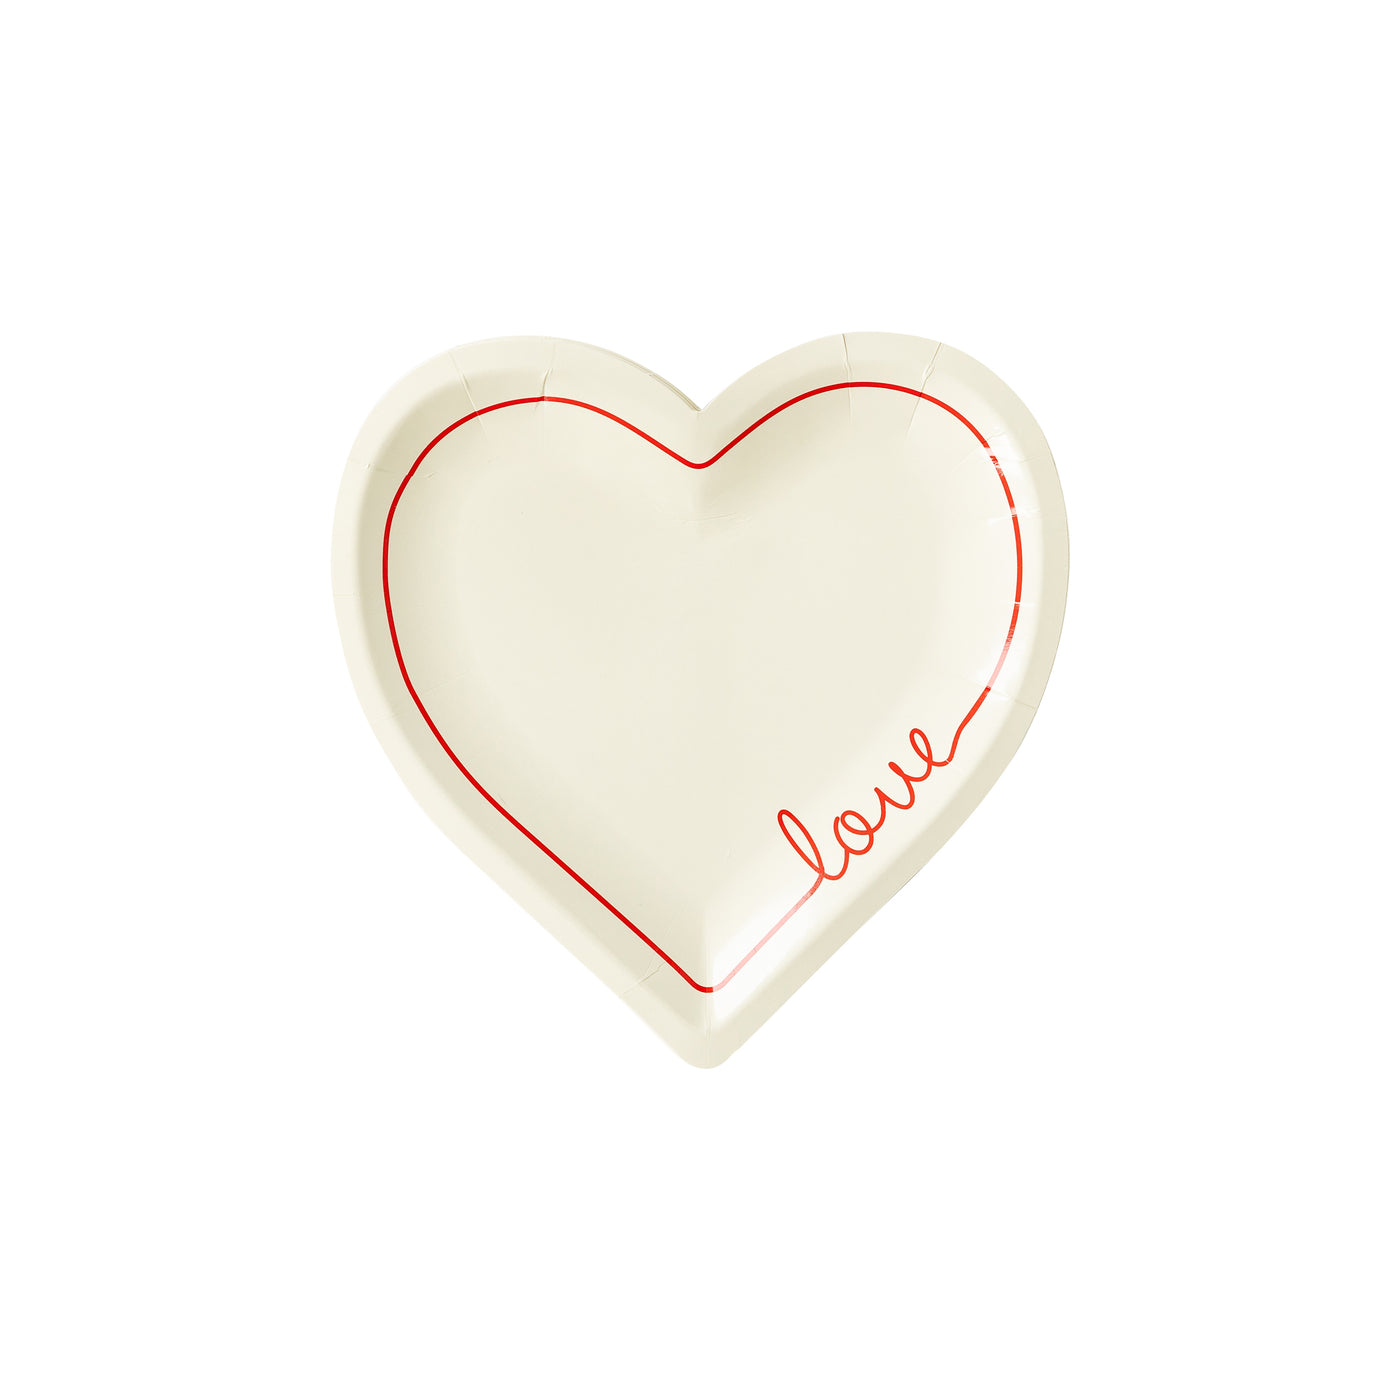 PLTS356V - White Love Heart Shaped Plate